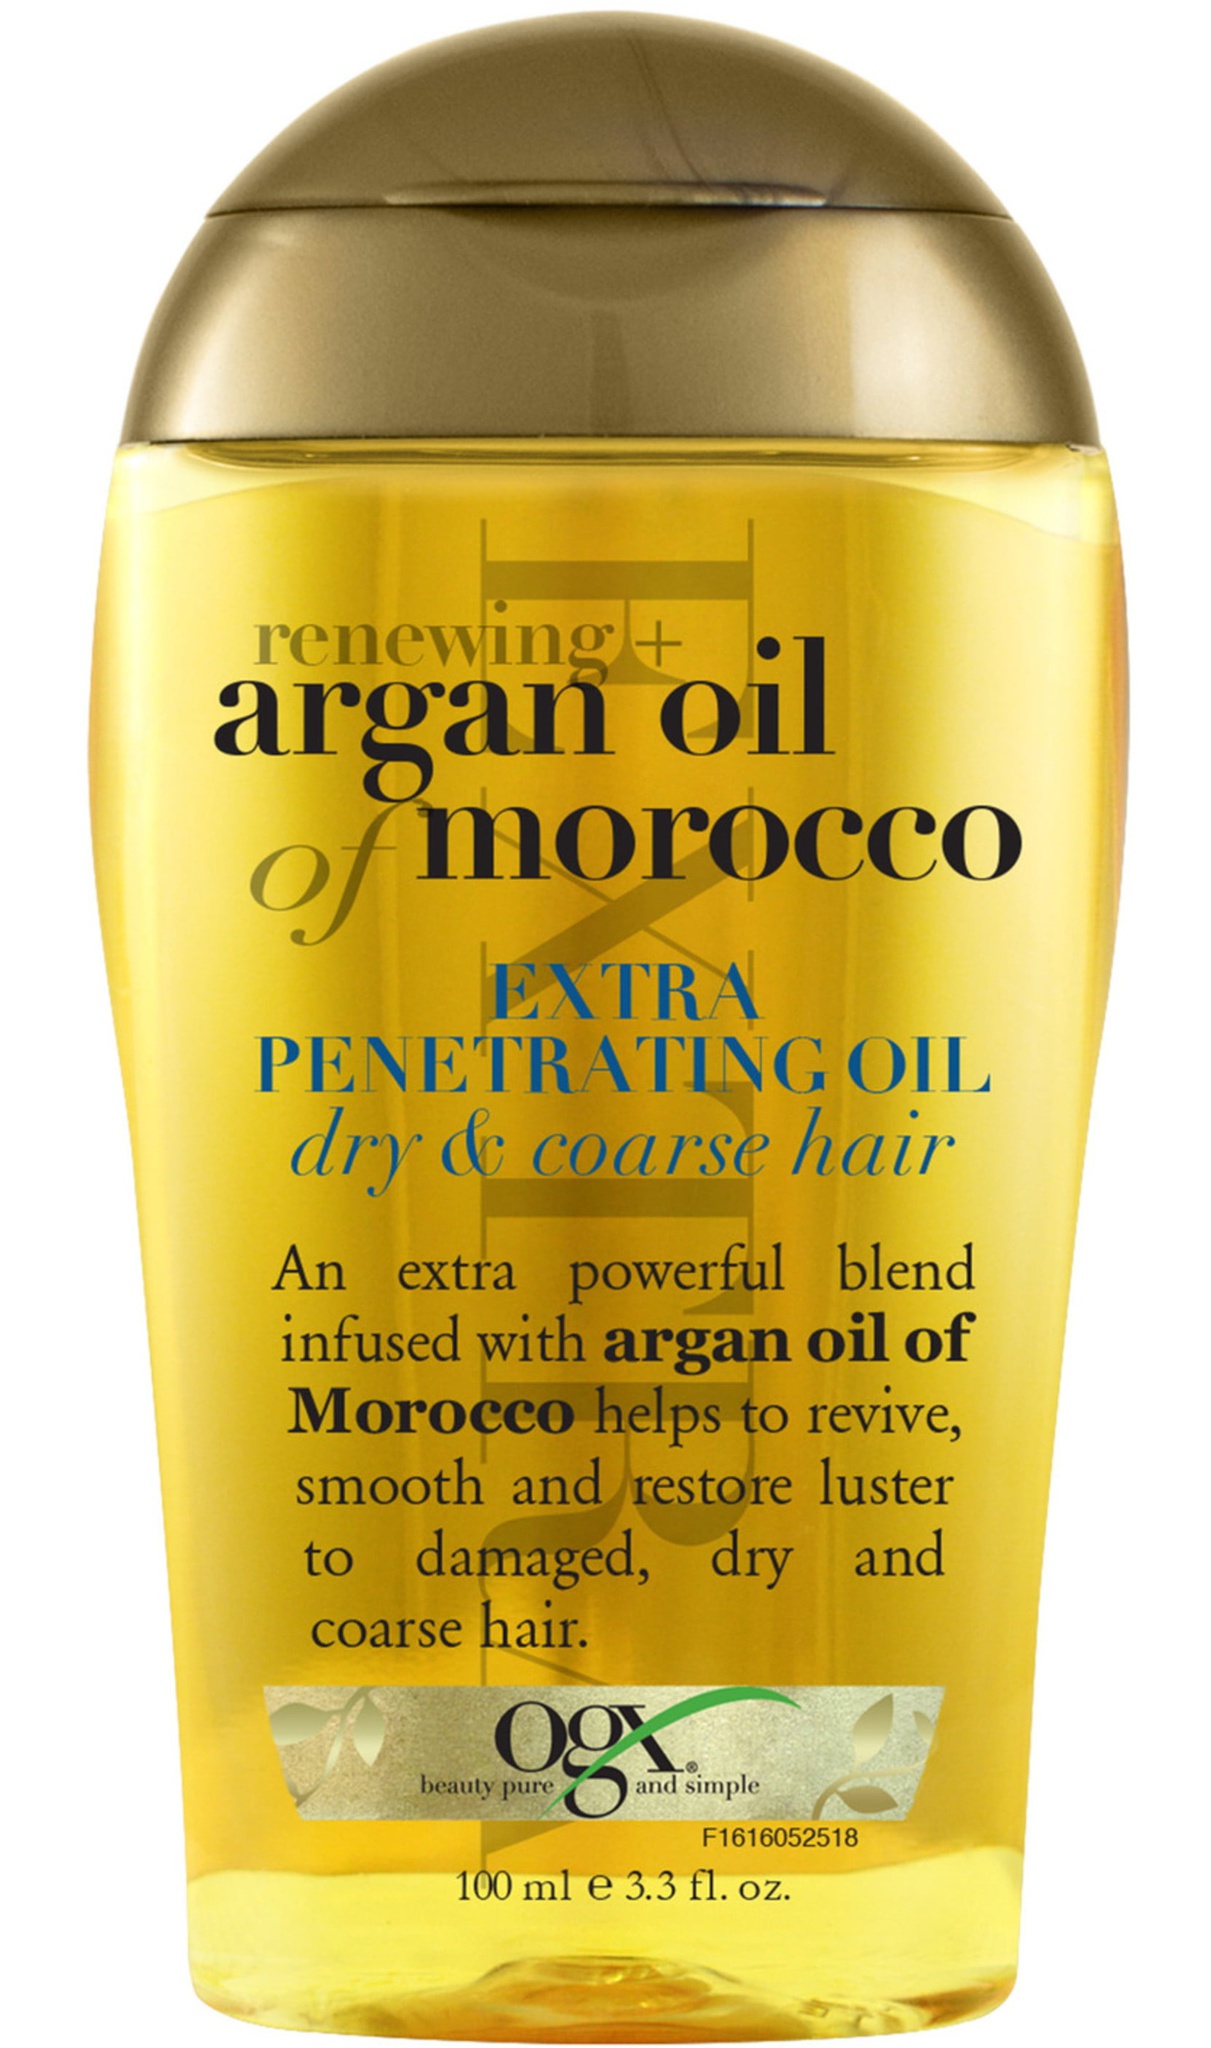 OGX Argan Oil Of Morocco Hair Oil Treatment